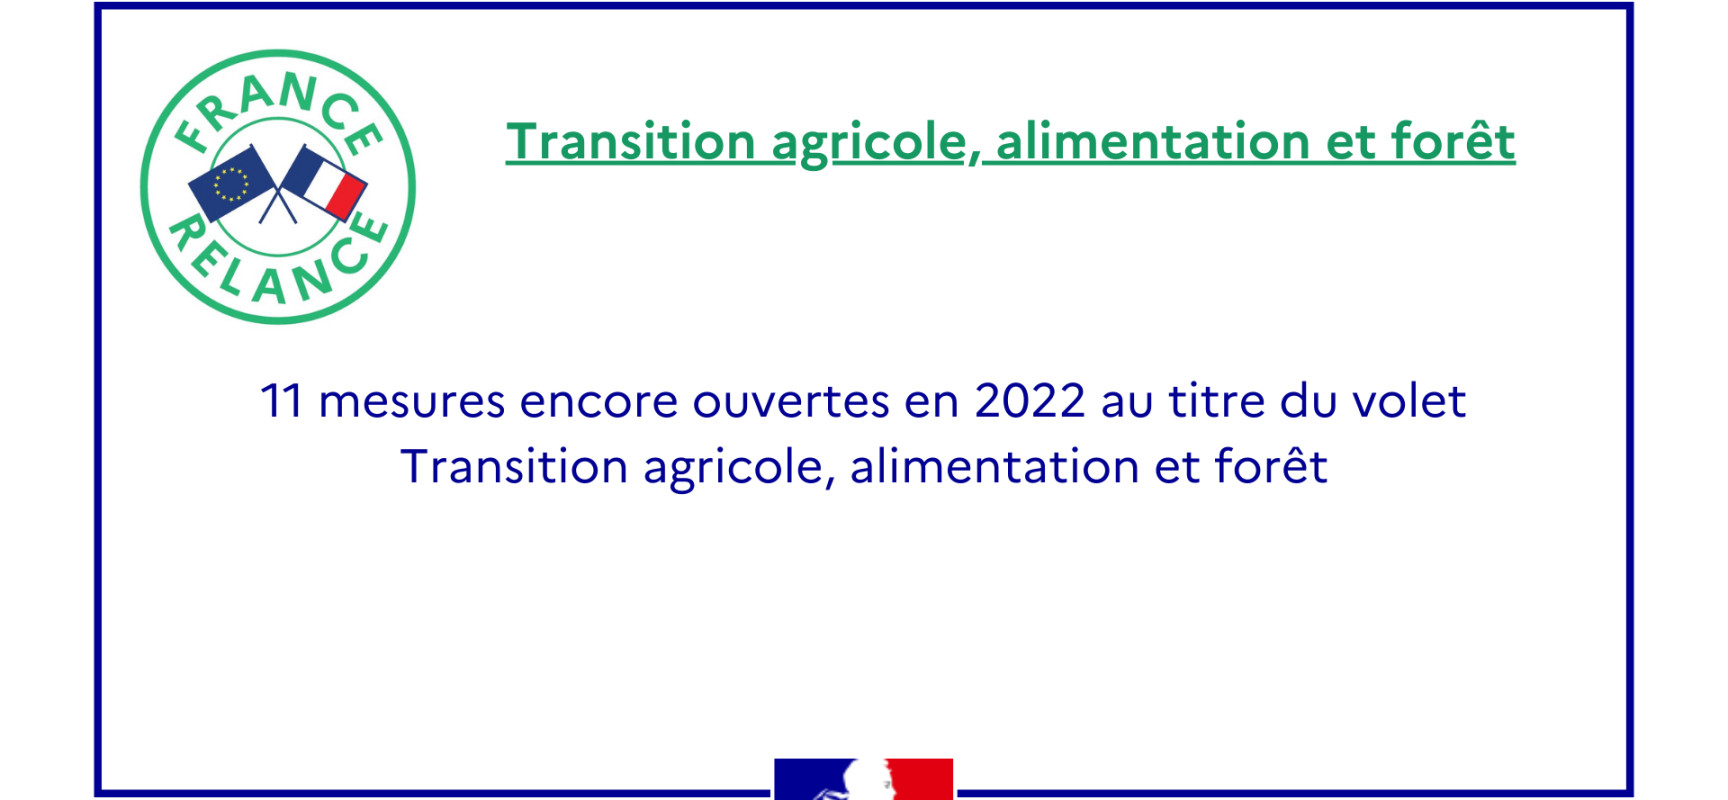 France Relance « Transition agricole, alimentation et forêt », 11 mesures sont encore ouvertes en 2022